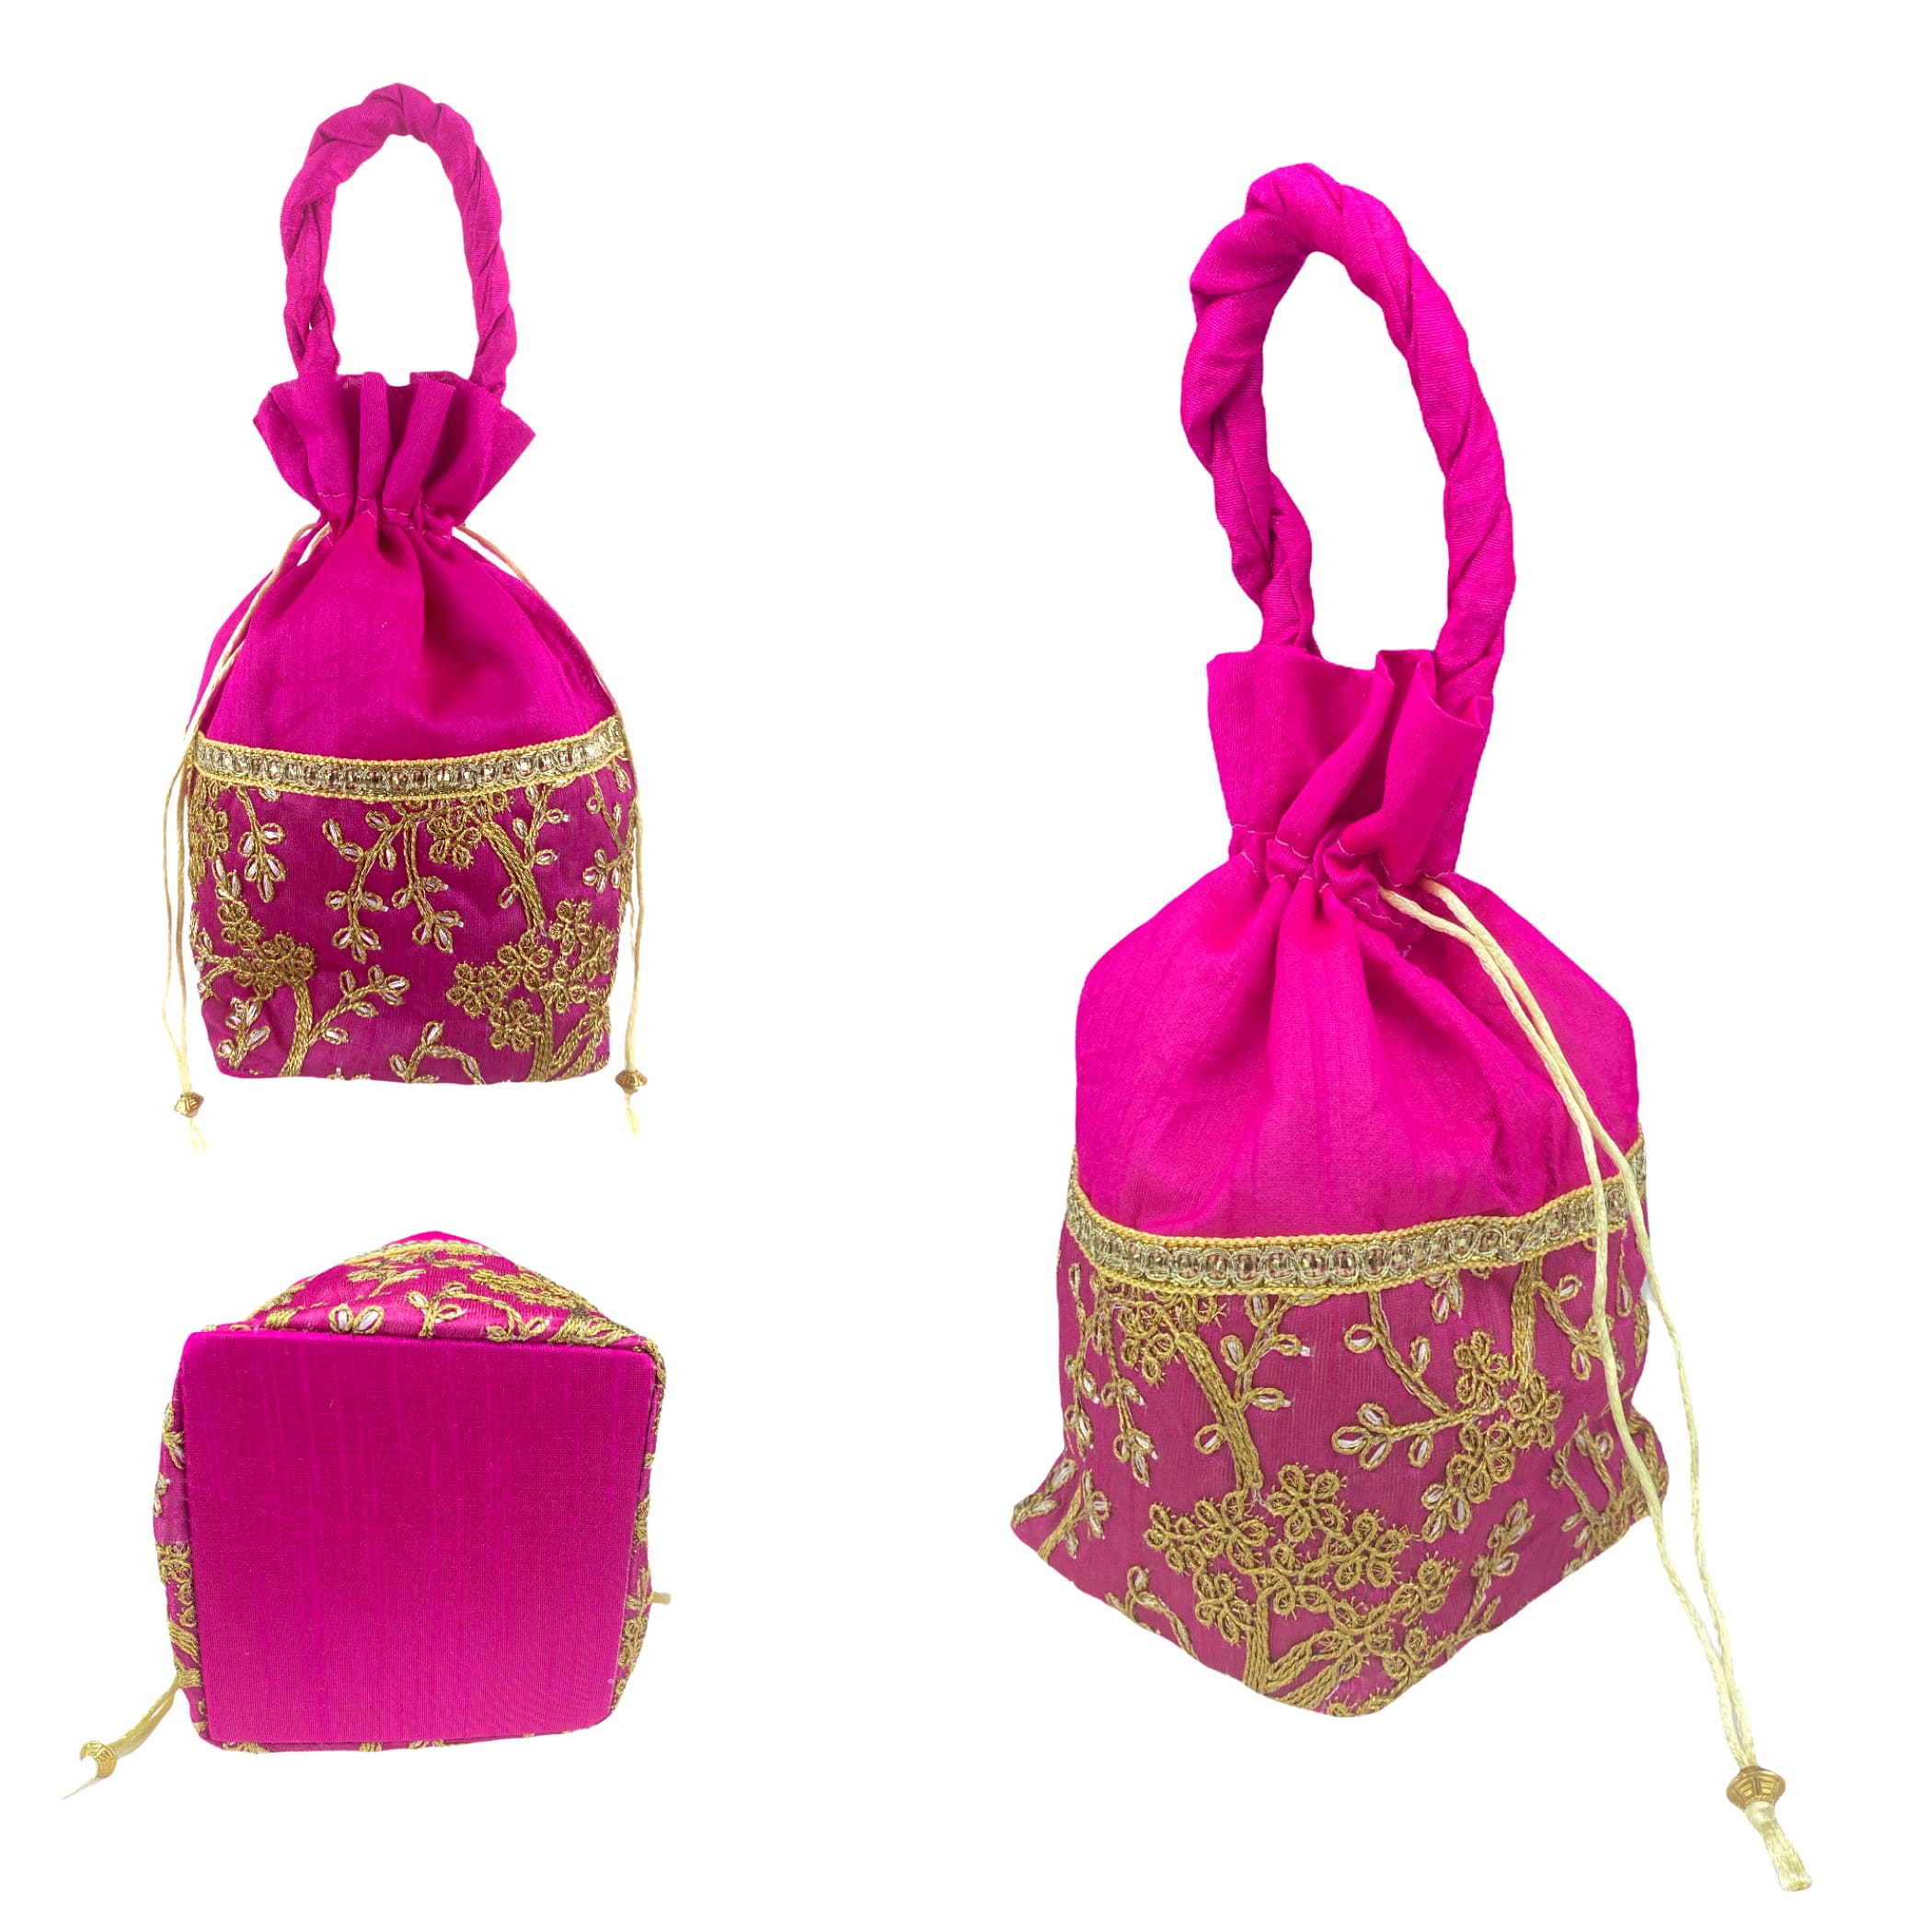 Potli Handbags Indian Handmade Womens Bag: Product Details - Export Portal